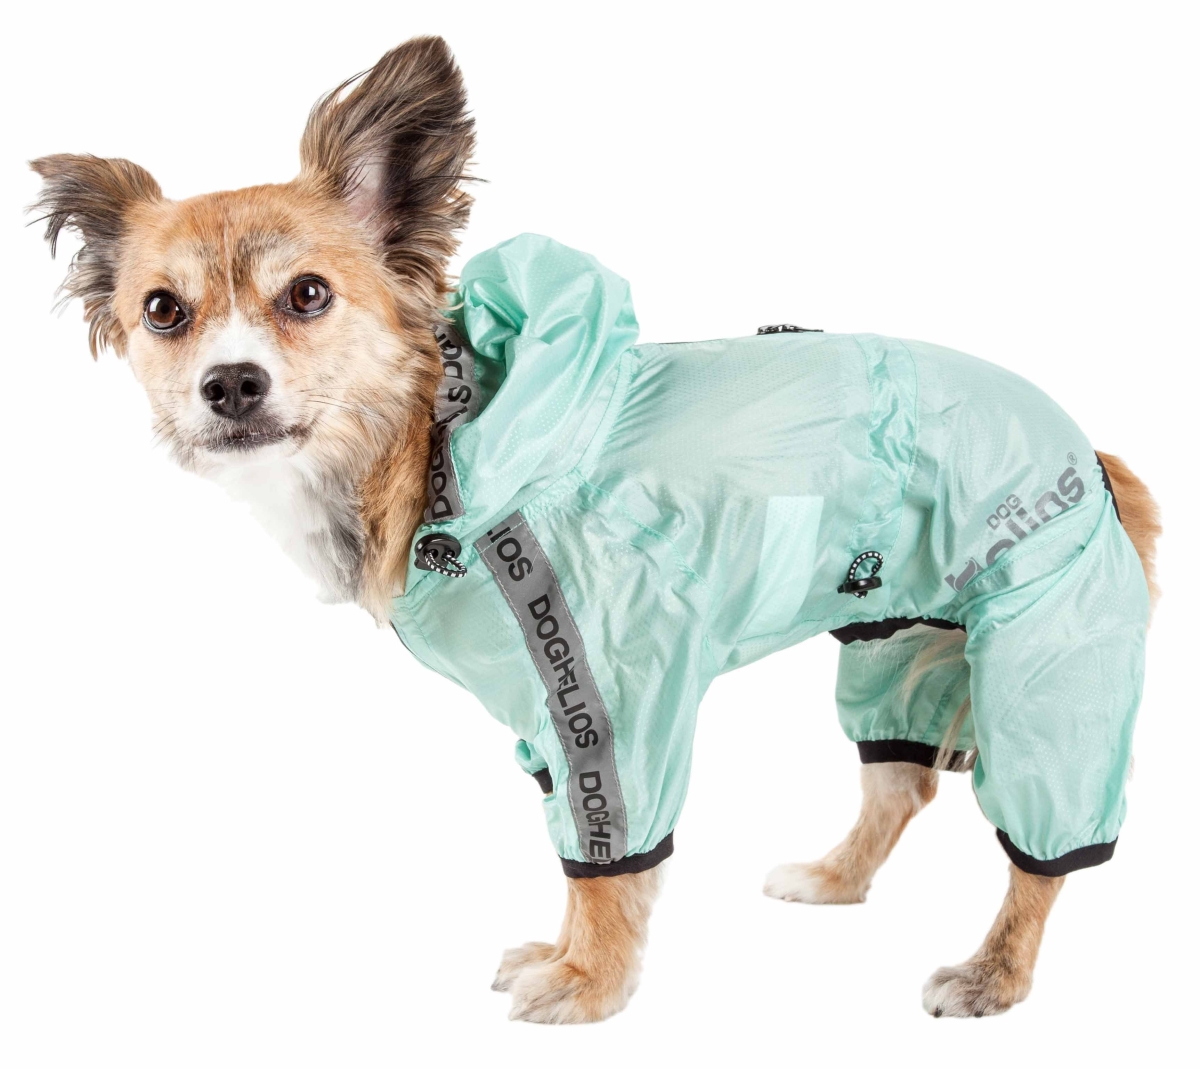 R8aqlg Torrential Shield Waterproof Multi-adjustable Full Bodied Pet Dog Windbreaker Raincoat - Aqua Blue, Large